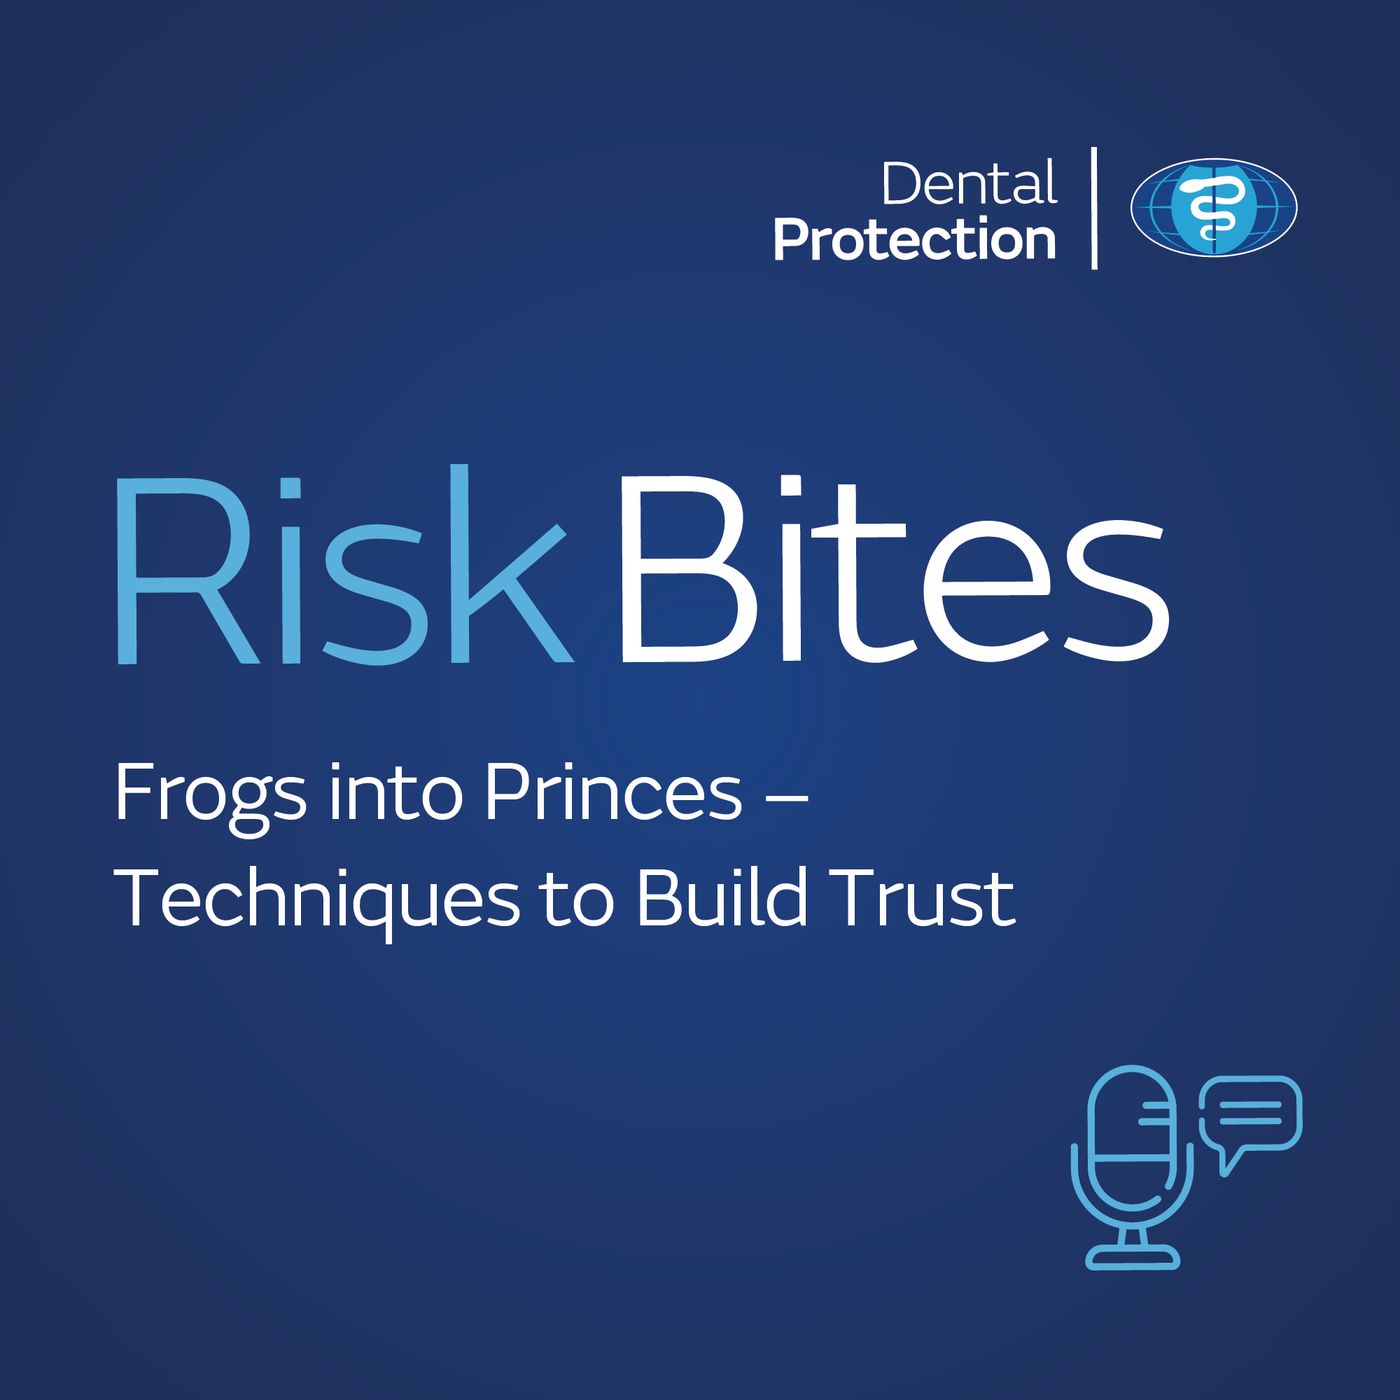 RiskBites: Frogs into Princes - Techniques to Build Trust